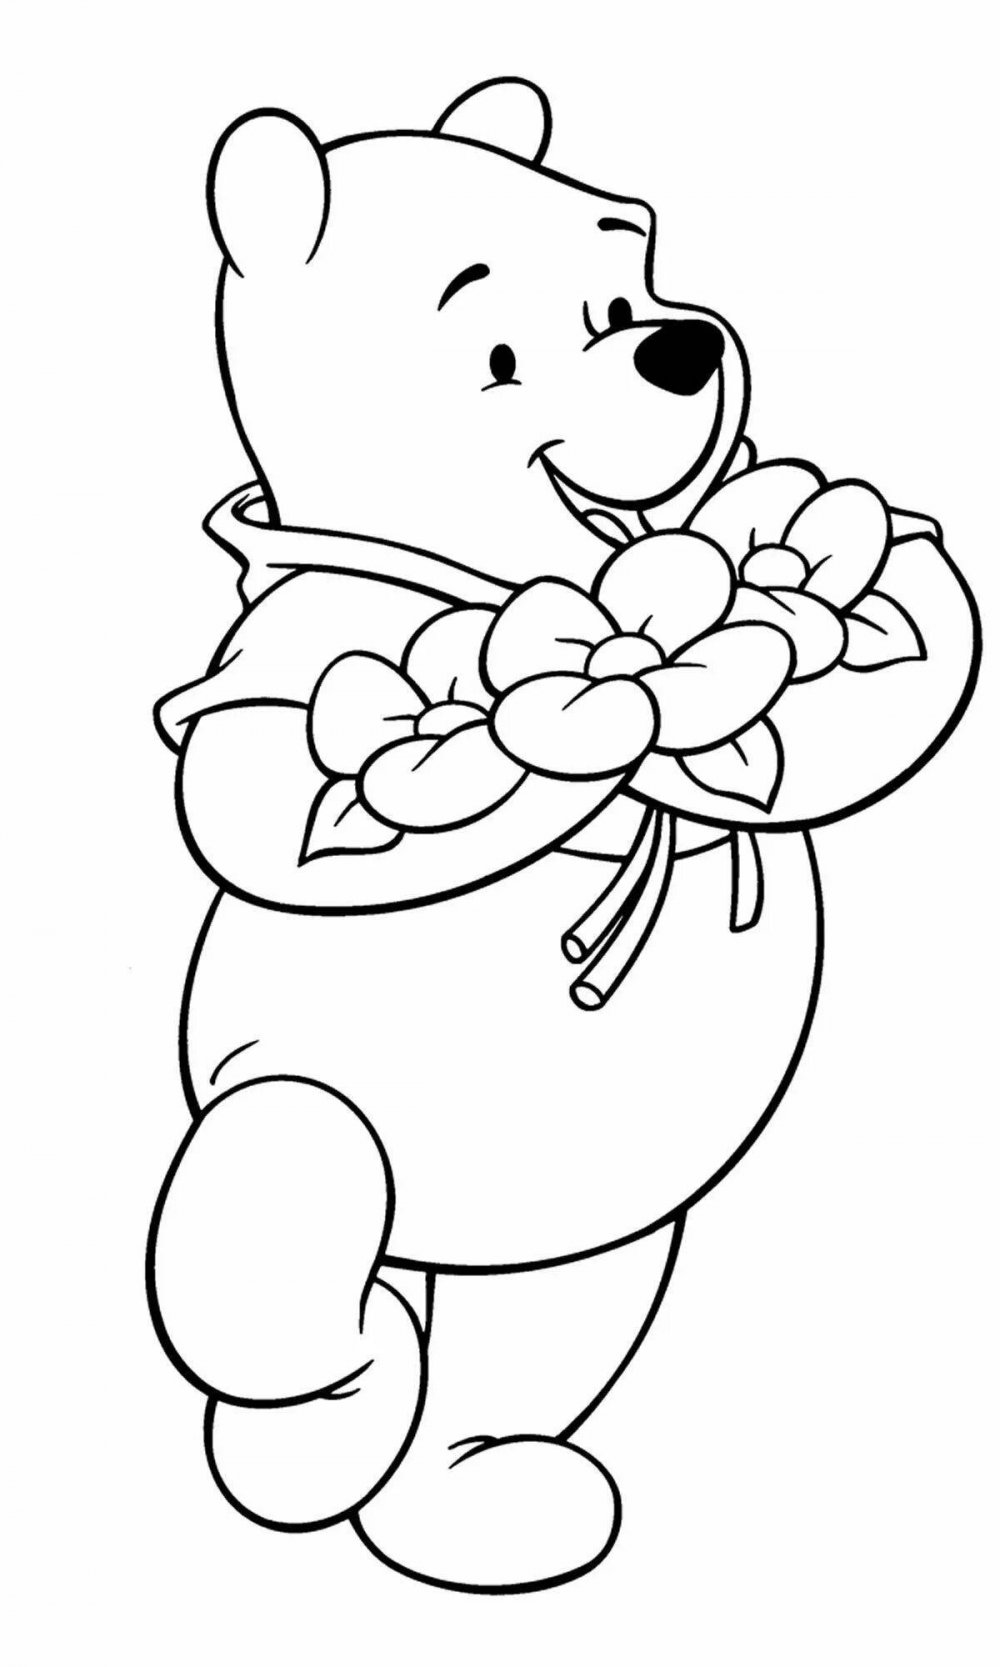 Медвежонок с цветами раскраска